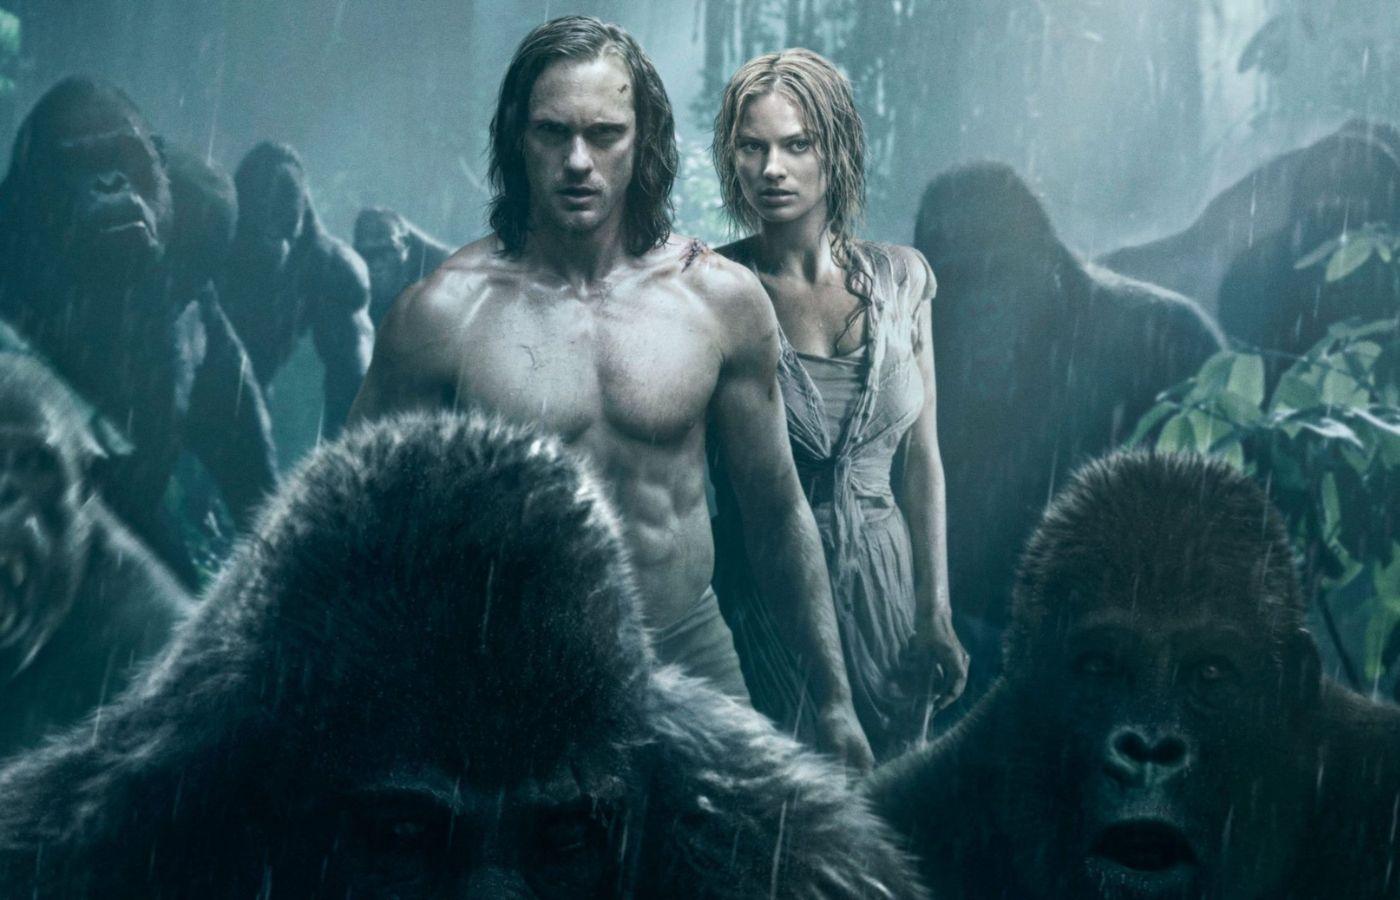 The cast of The Legend of Tarzan